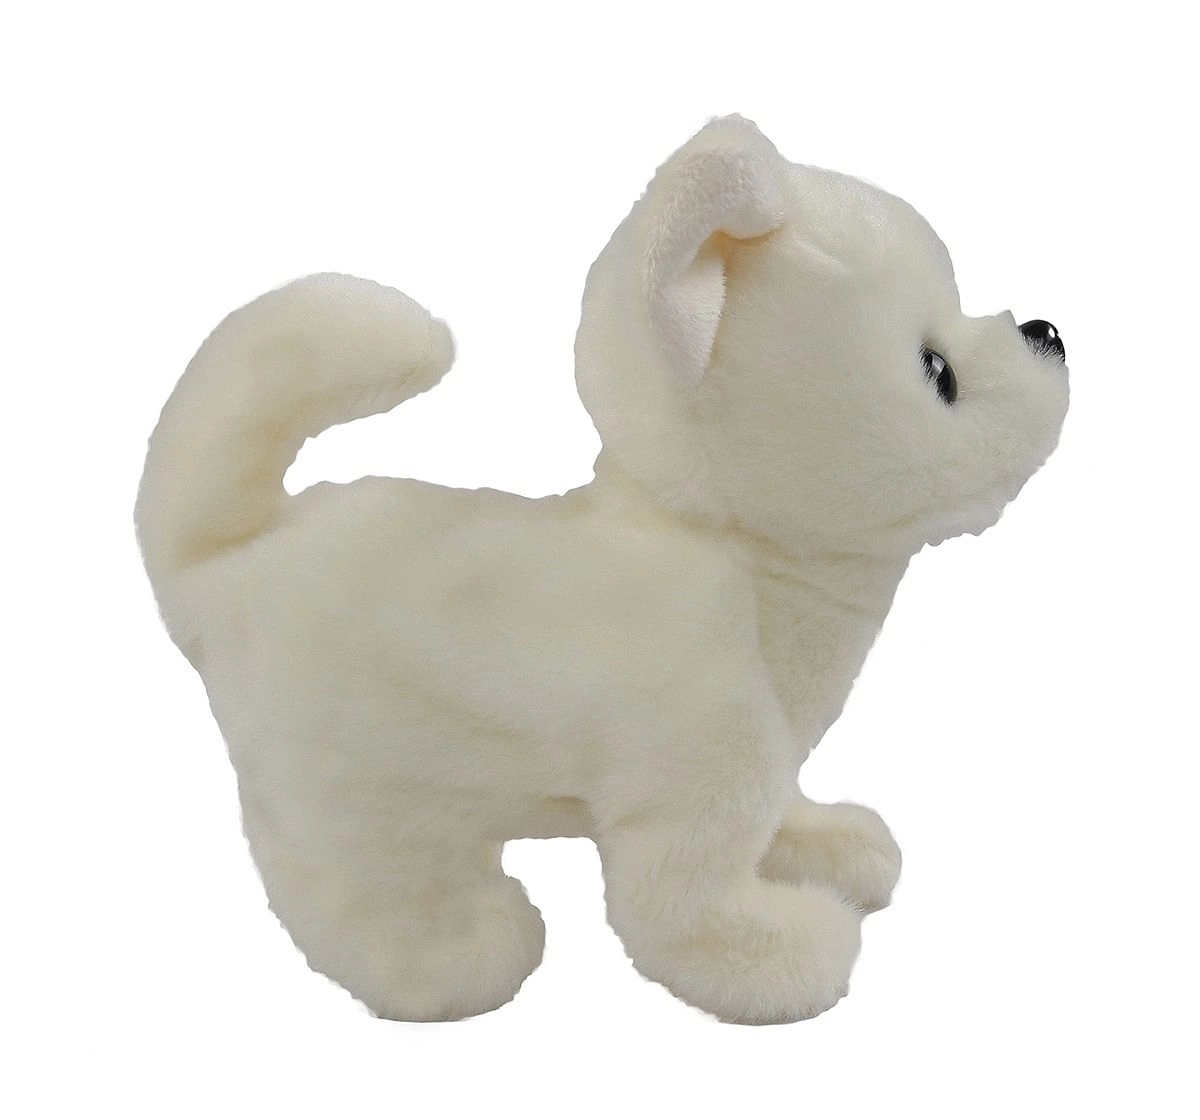 Rowan Baby Chihuahua Interactive Plush Soft Dog for Kids age 3Y+ - 15 Cm (White) 